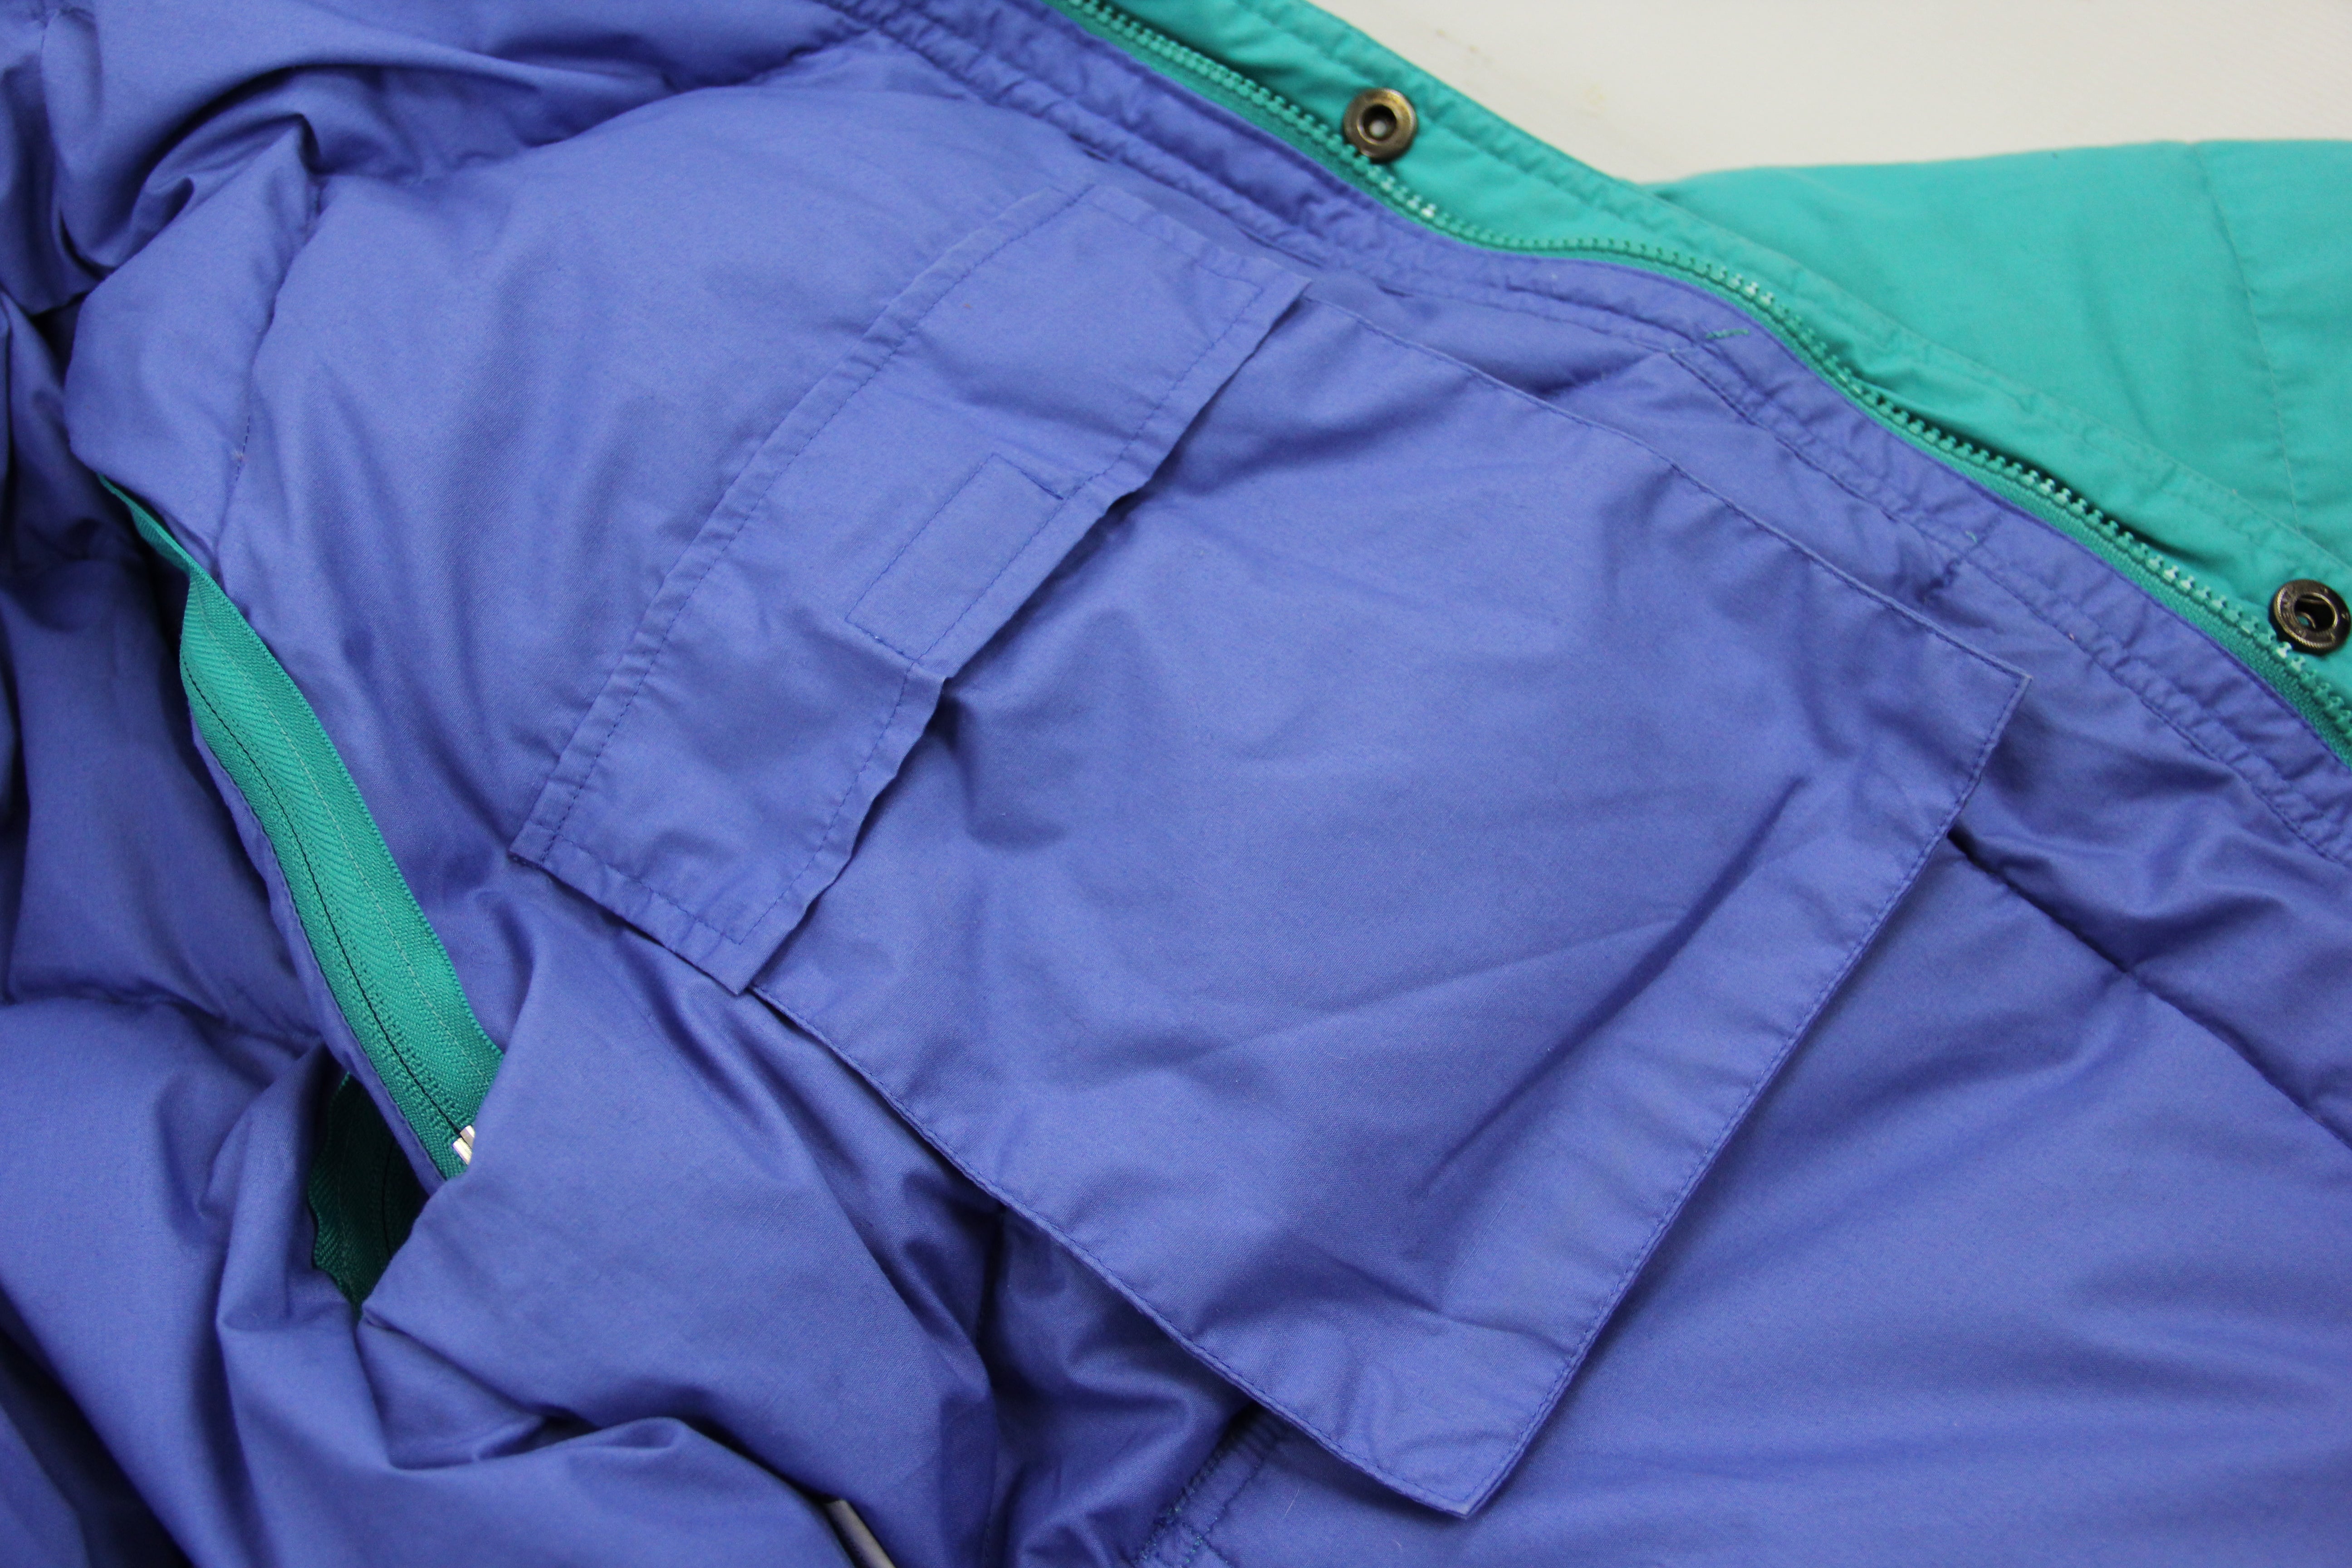 Men's Green Cotton 2 in 1 Puffer Down Jacket/Vest, SIZE M